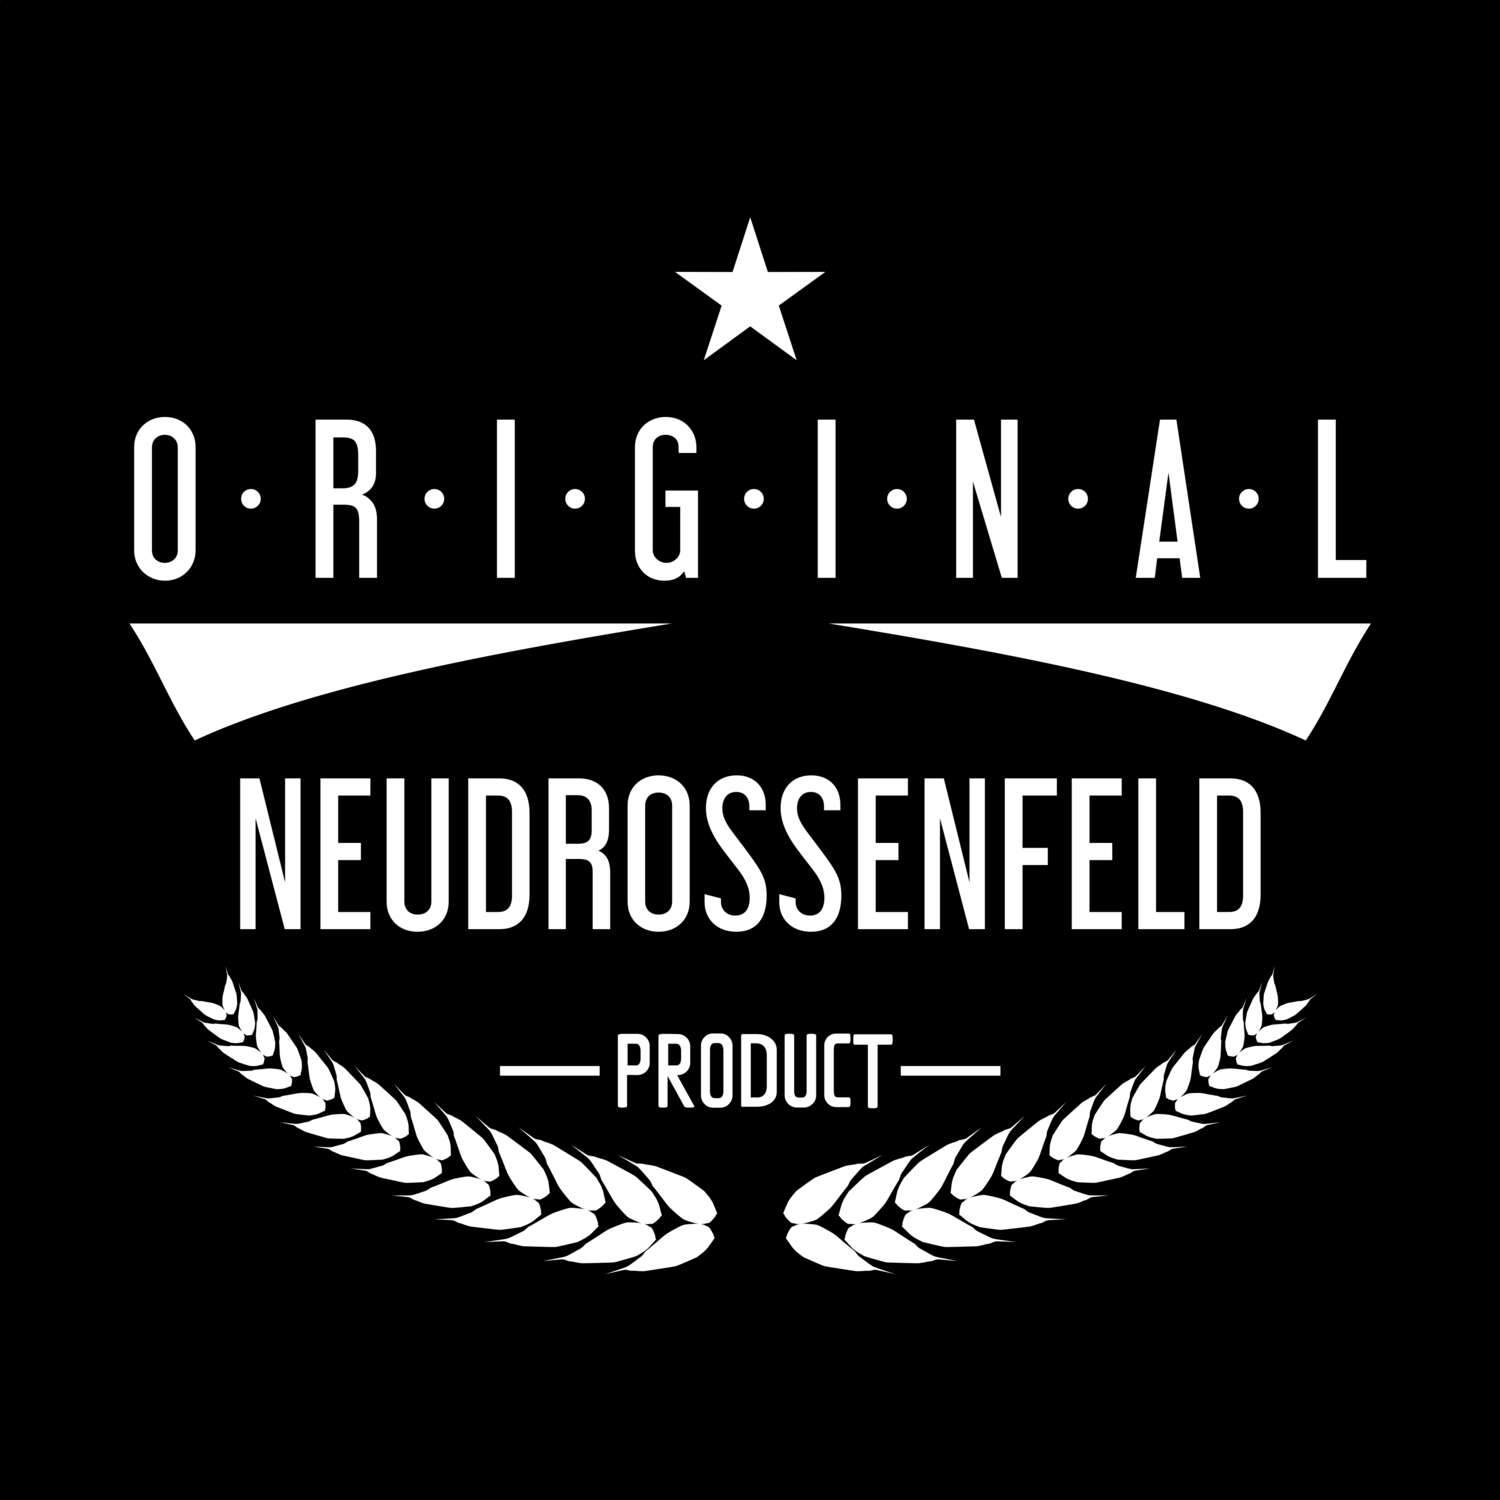 Neudrossenfeld T-Shirt »Original Product«